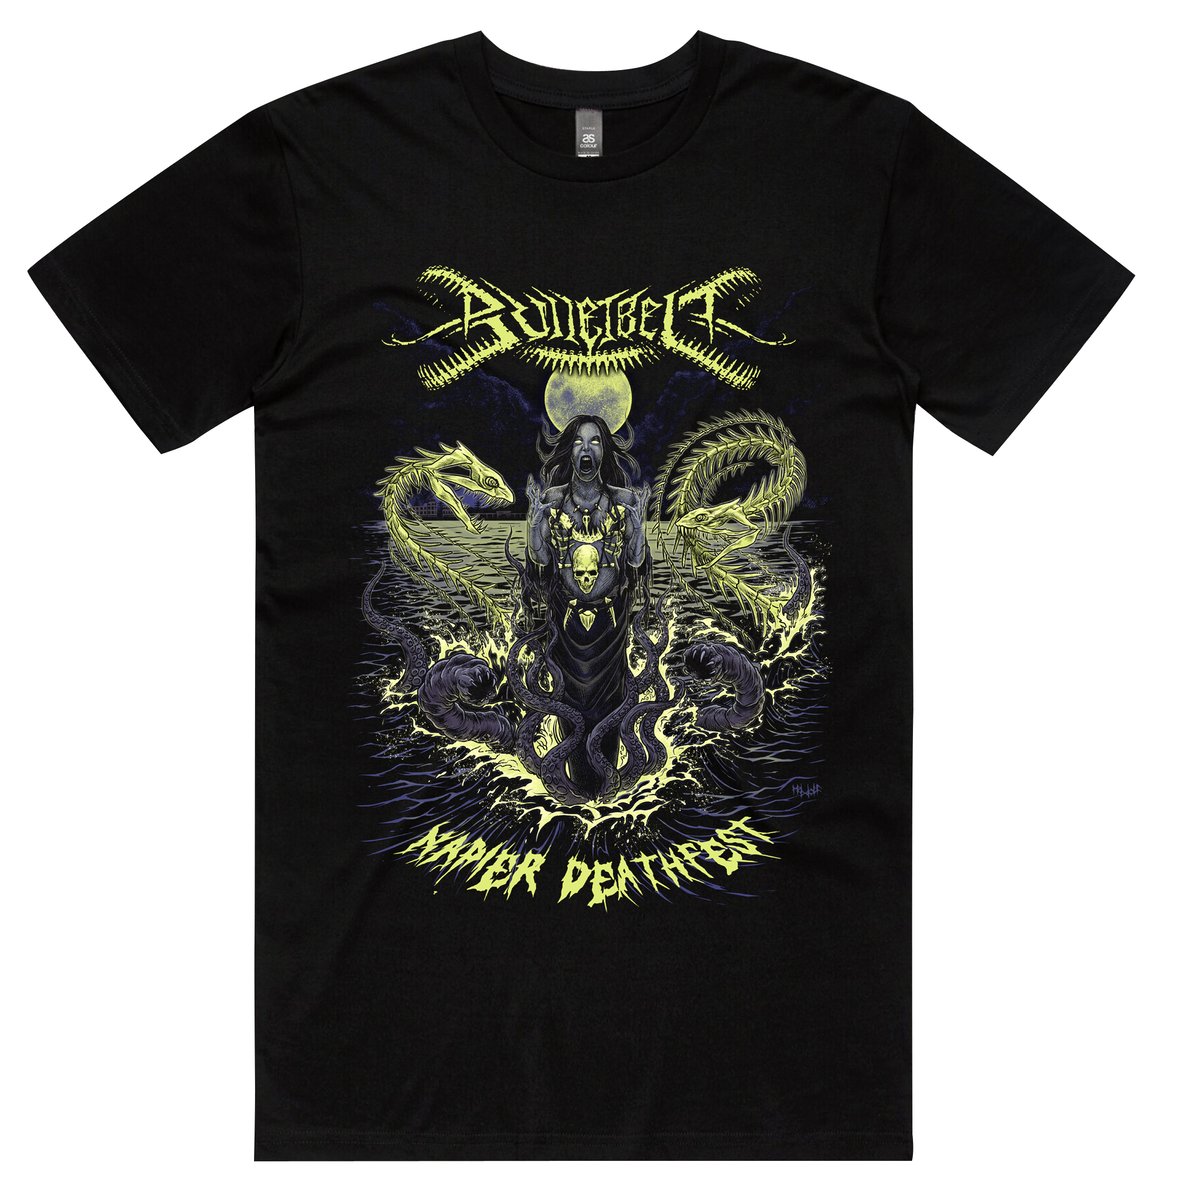 Bulletbelt 'Napier Deathfest' Tee | Bulletbelt Official Web Store